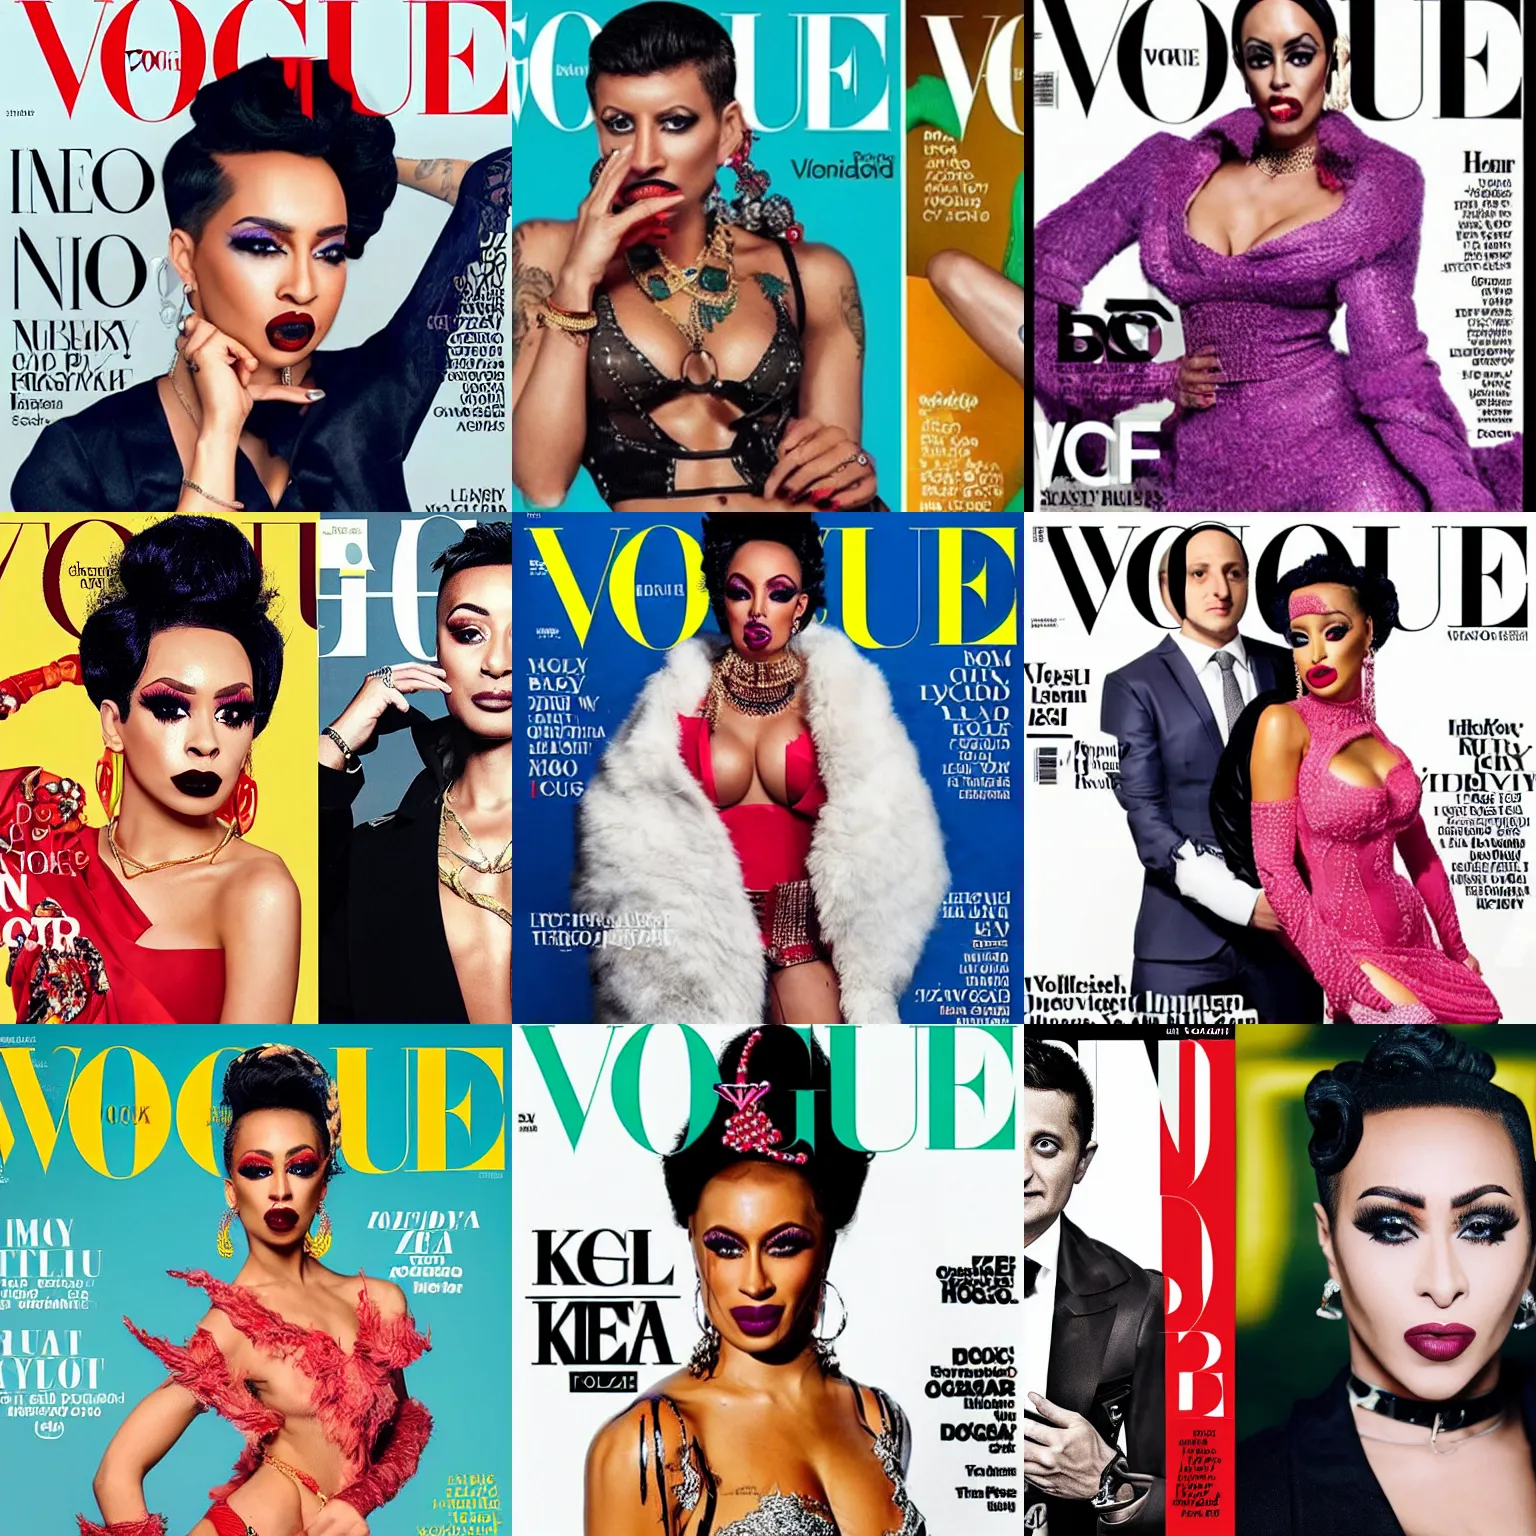 Prompt: Volodymyr Zelensky dressed like Keyshia Ka'oir on the cover of the Vogue magazine